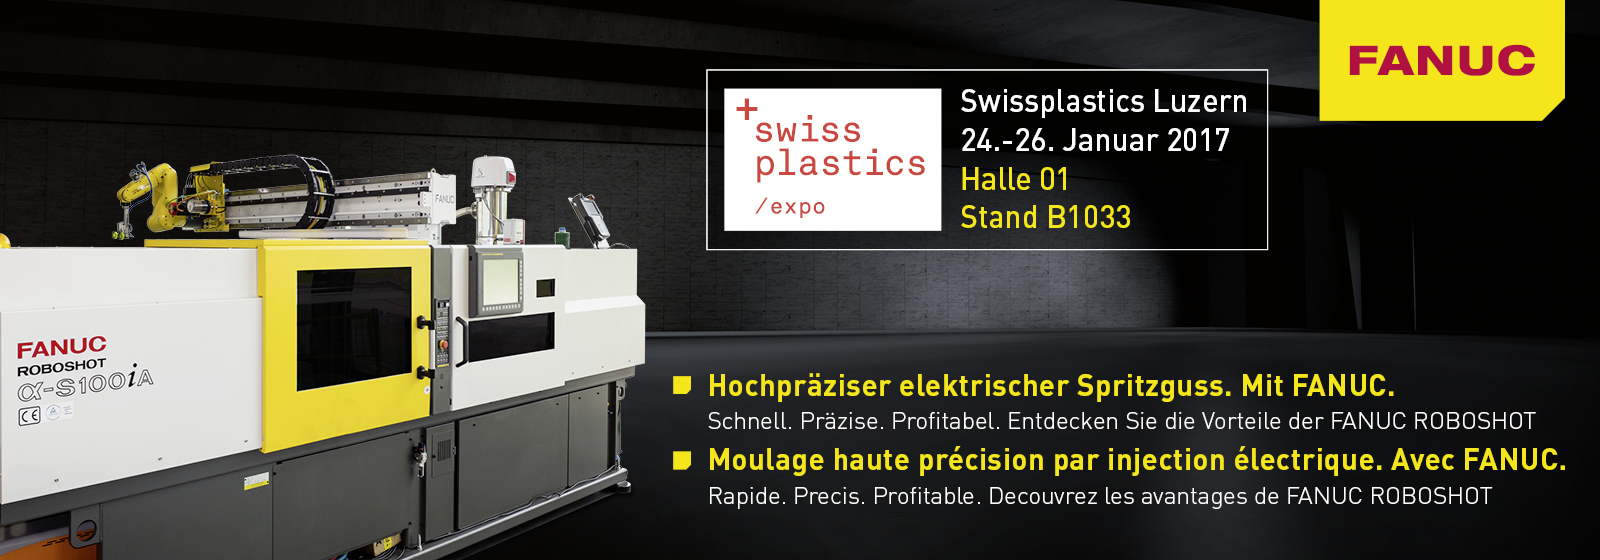 Swiss Plastics 2016 - banner